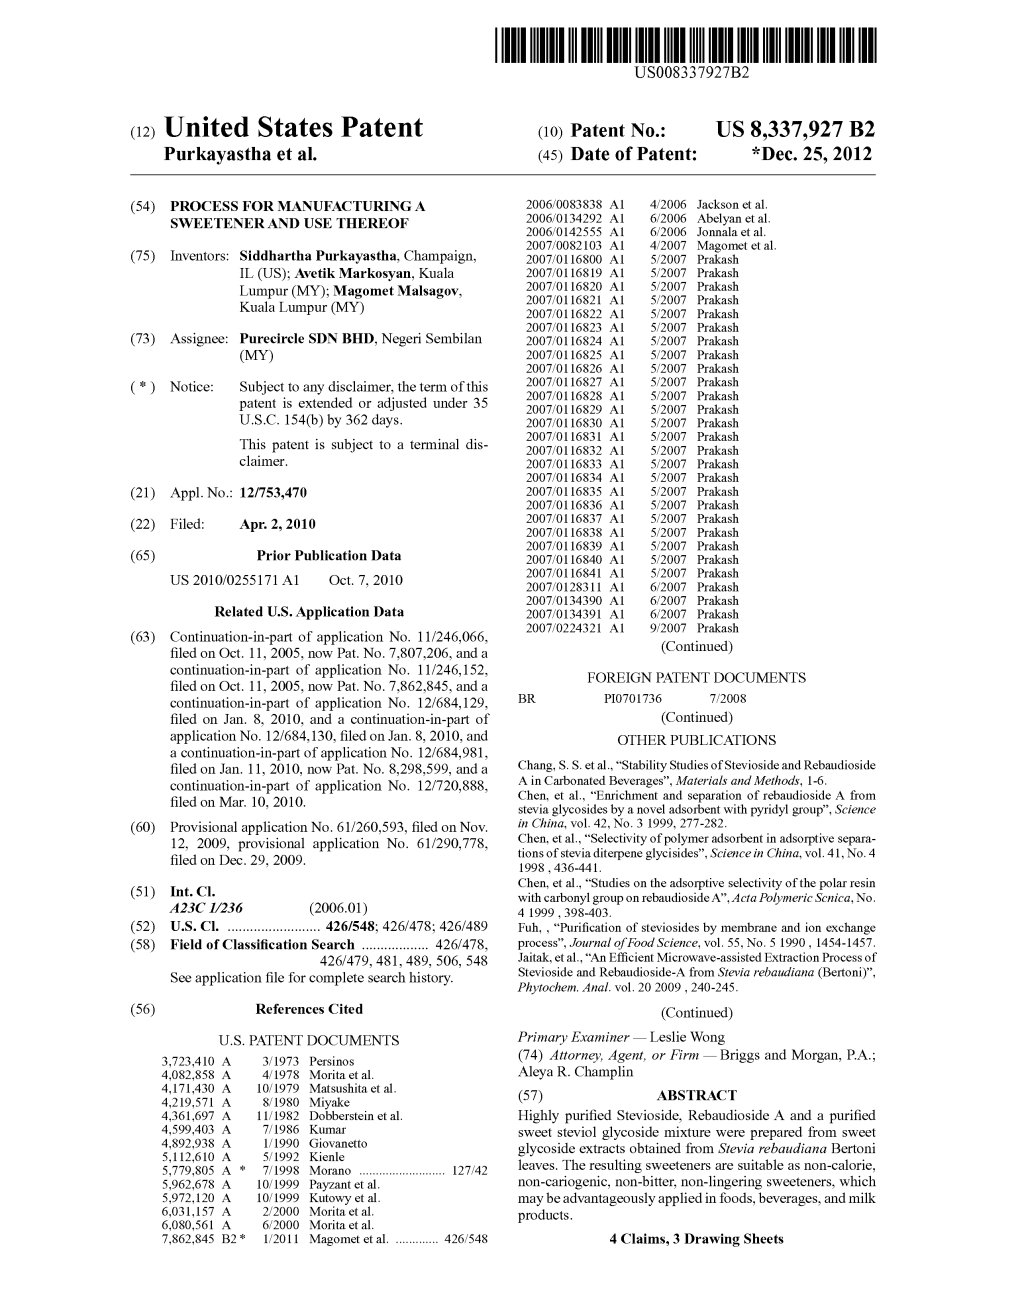 (12) United States Patent (10) Patent No.: US 8,337,927 B2 Purkayastha Et Al